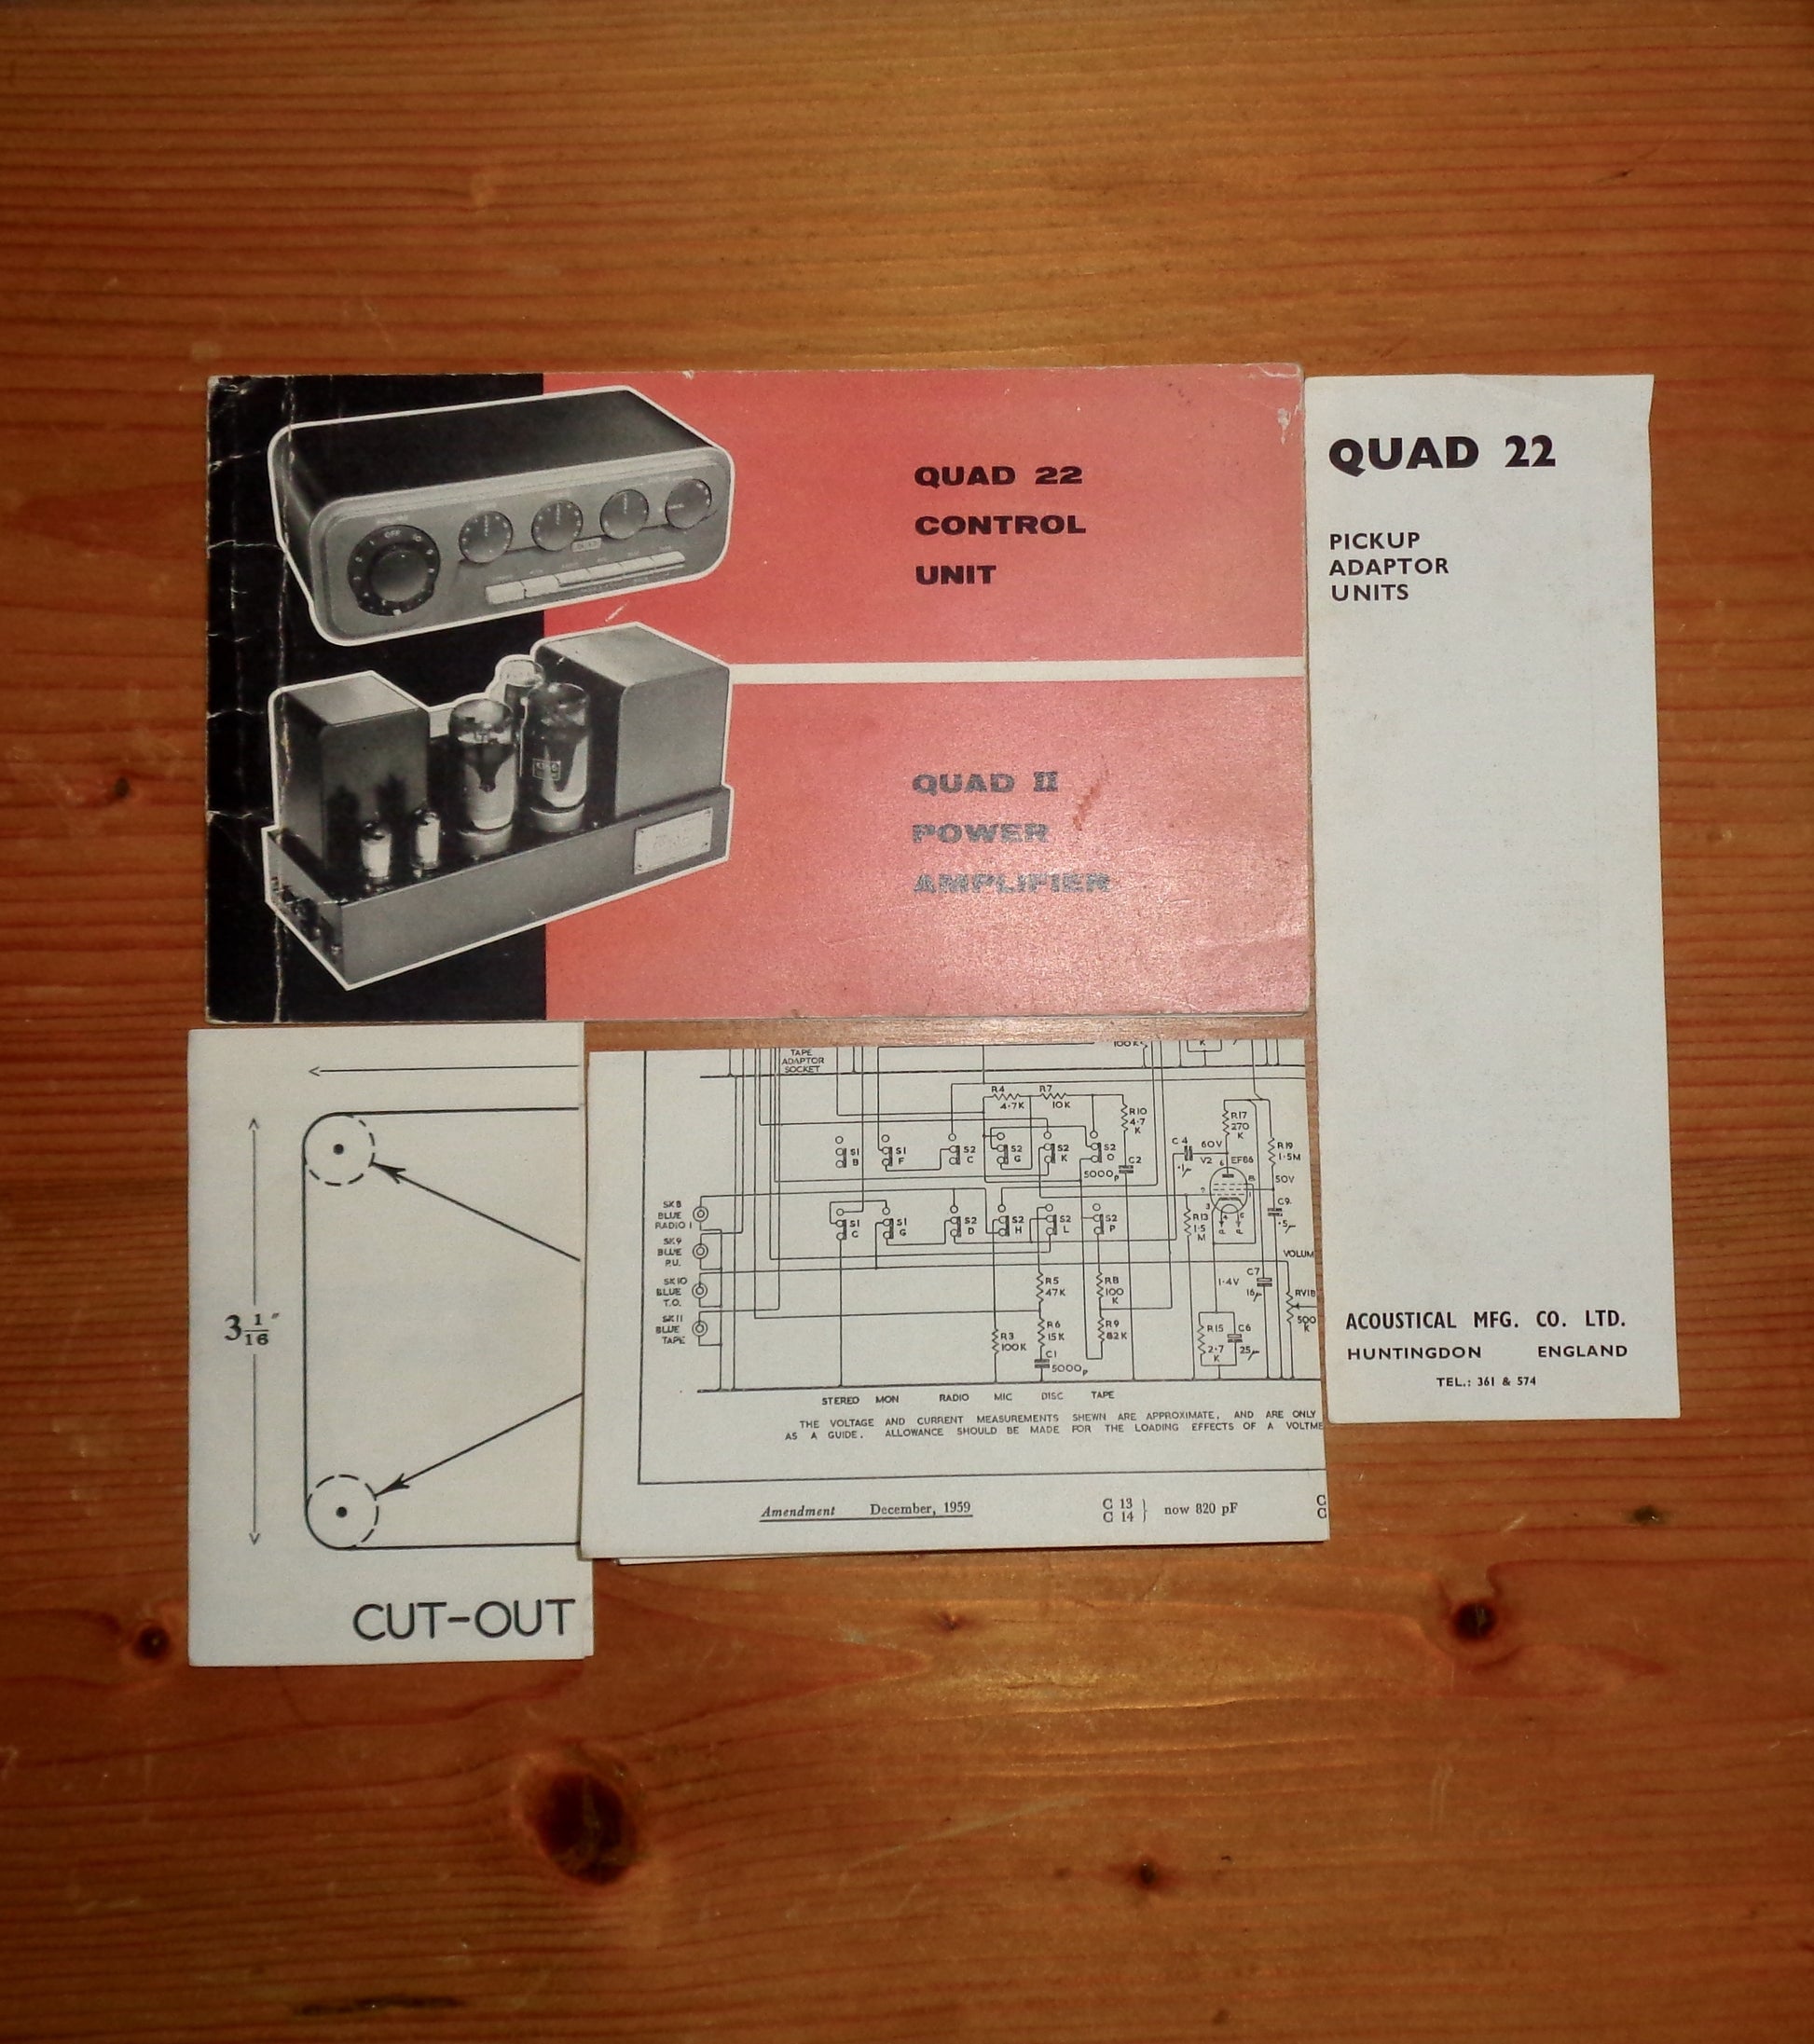 Original Quad 22 Control Unit And Quad II Power Amplifier Instruction Book